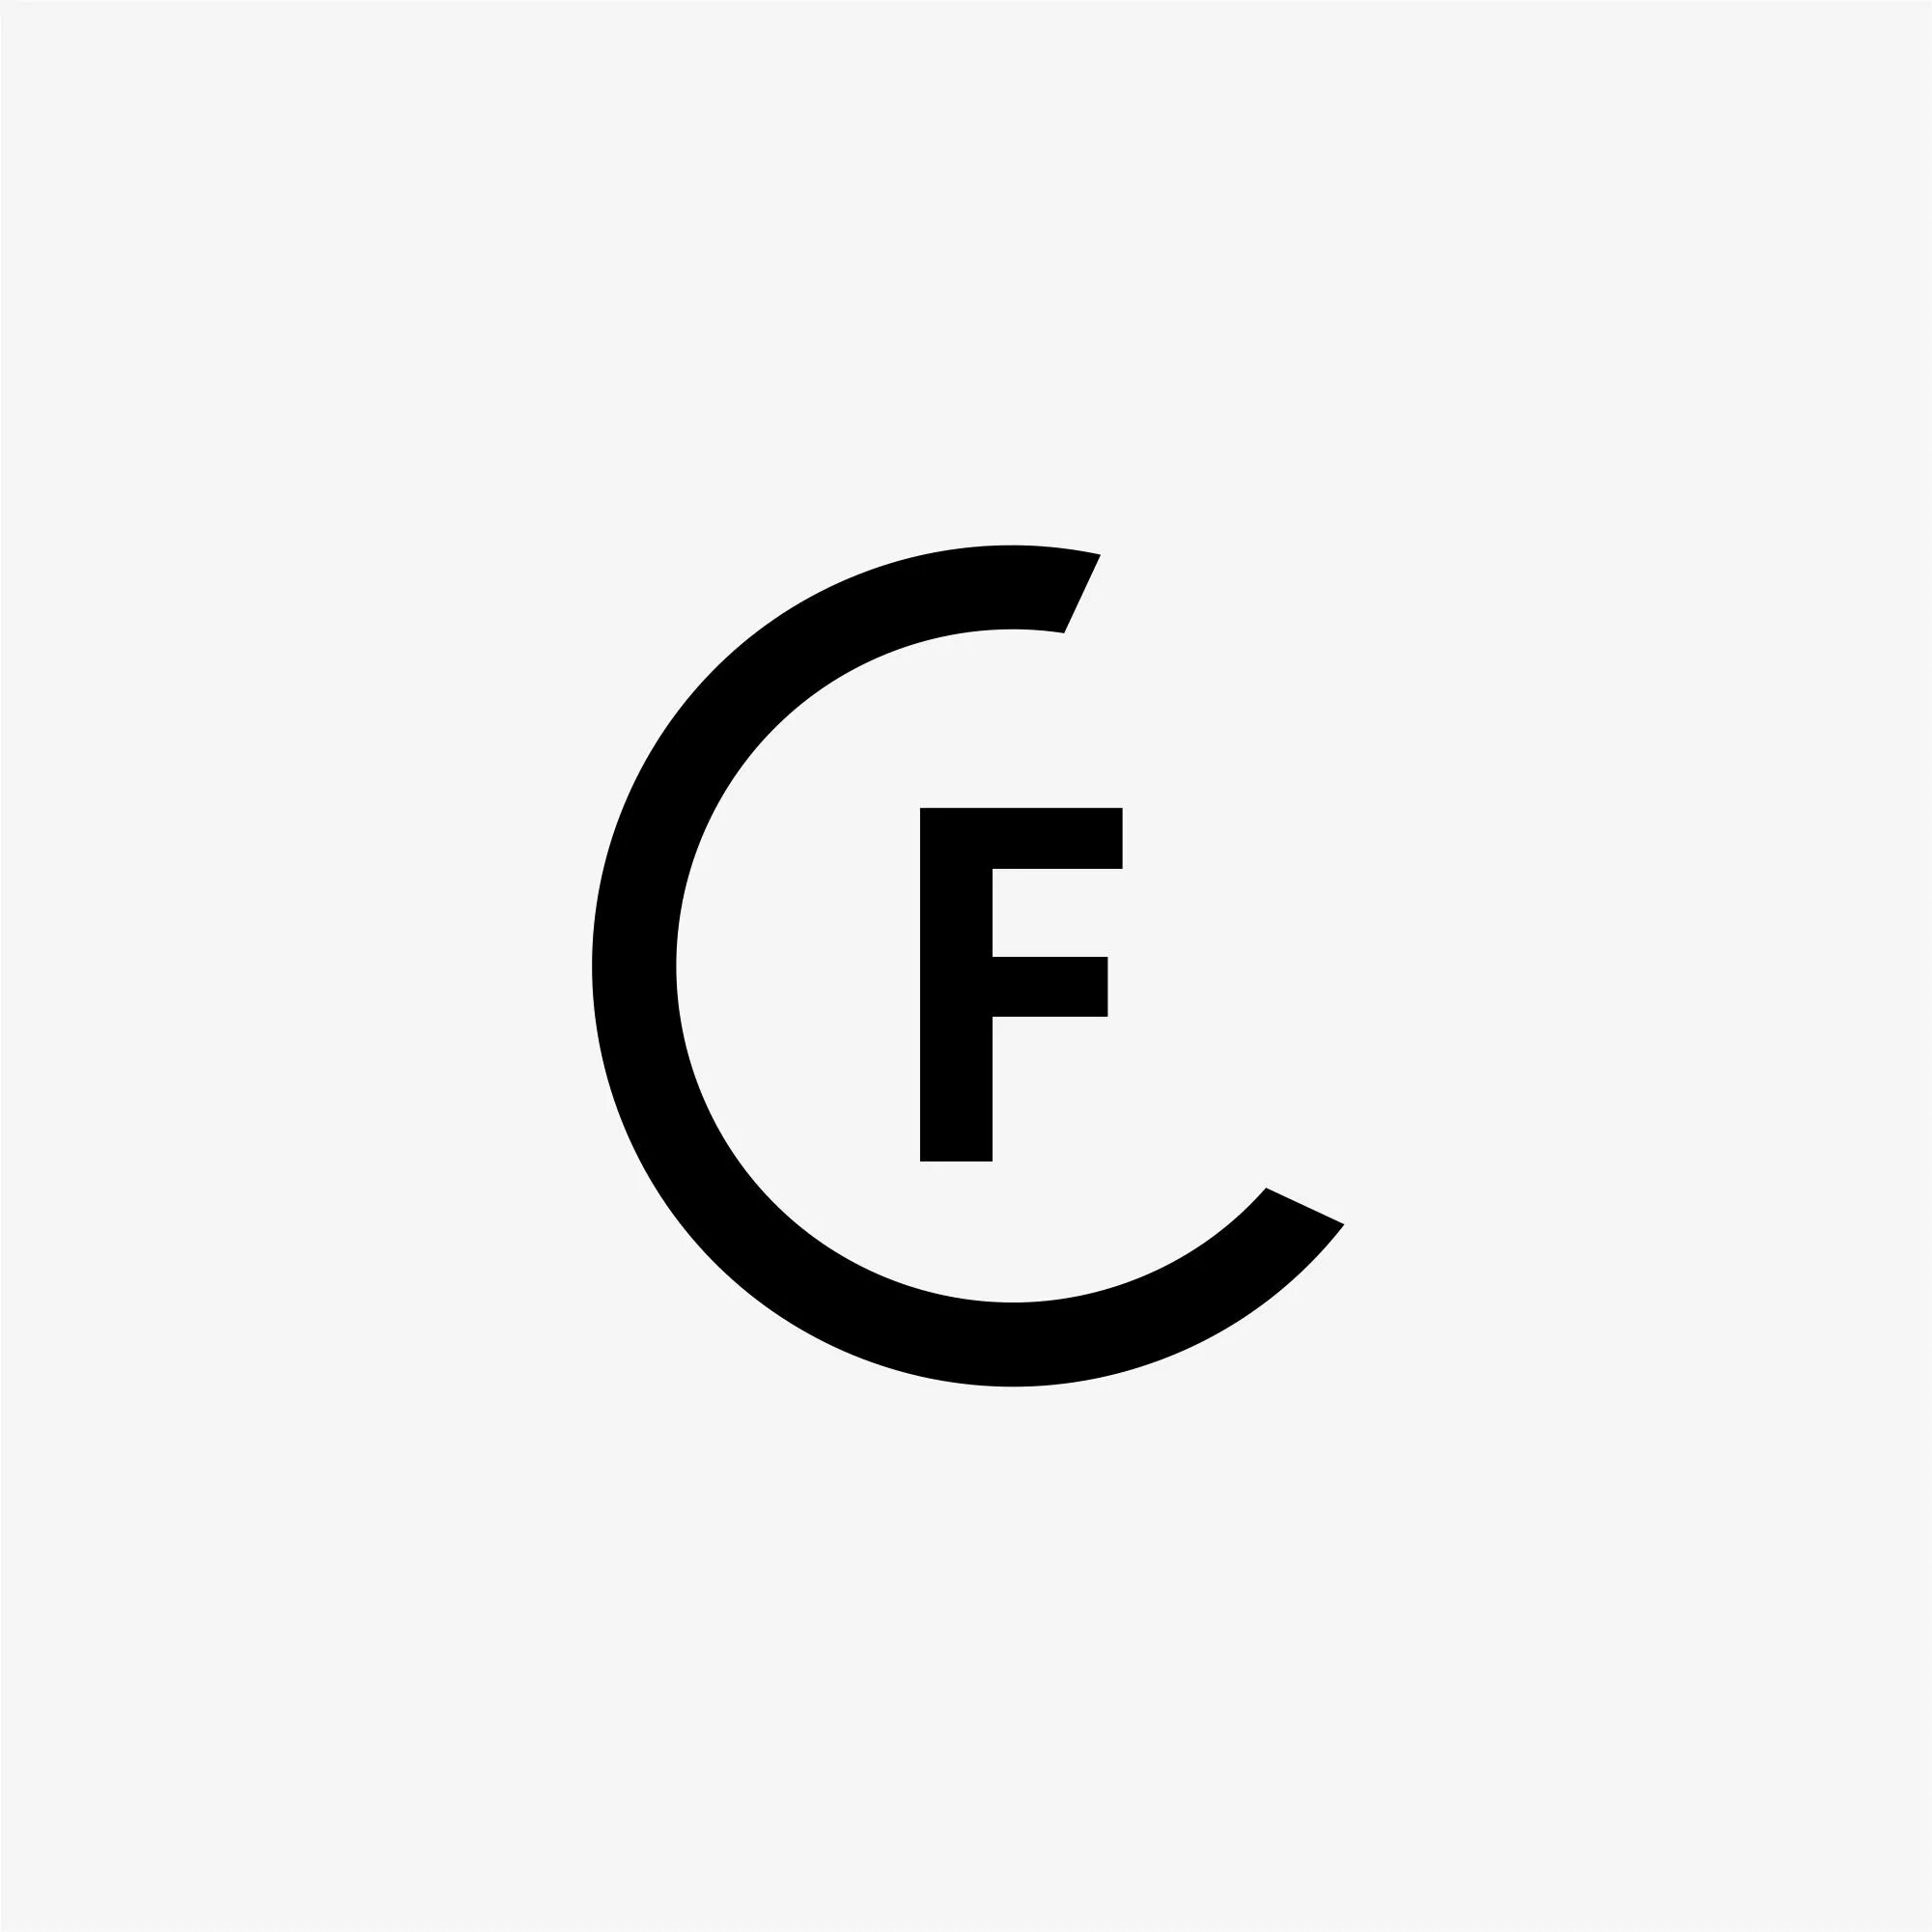 C f site. Буква f лого. Буква ф логотип. Буква а логотип. Логотипы компании буквой f.